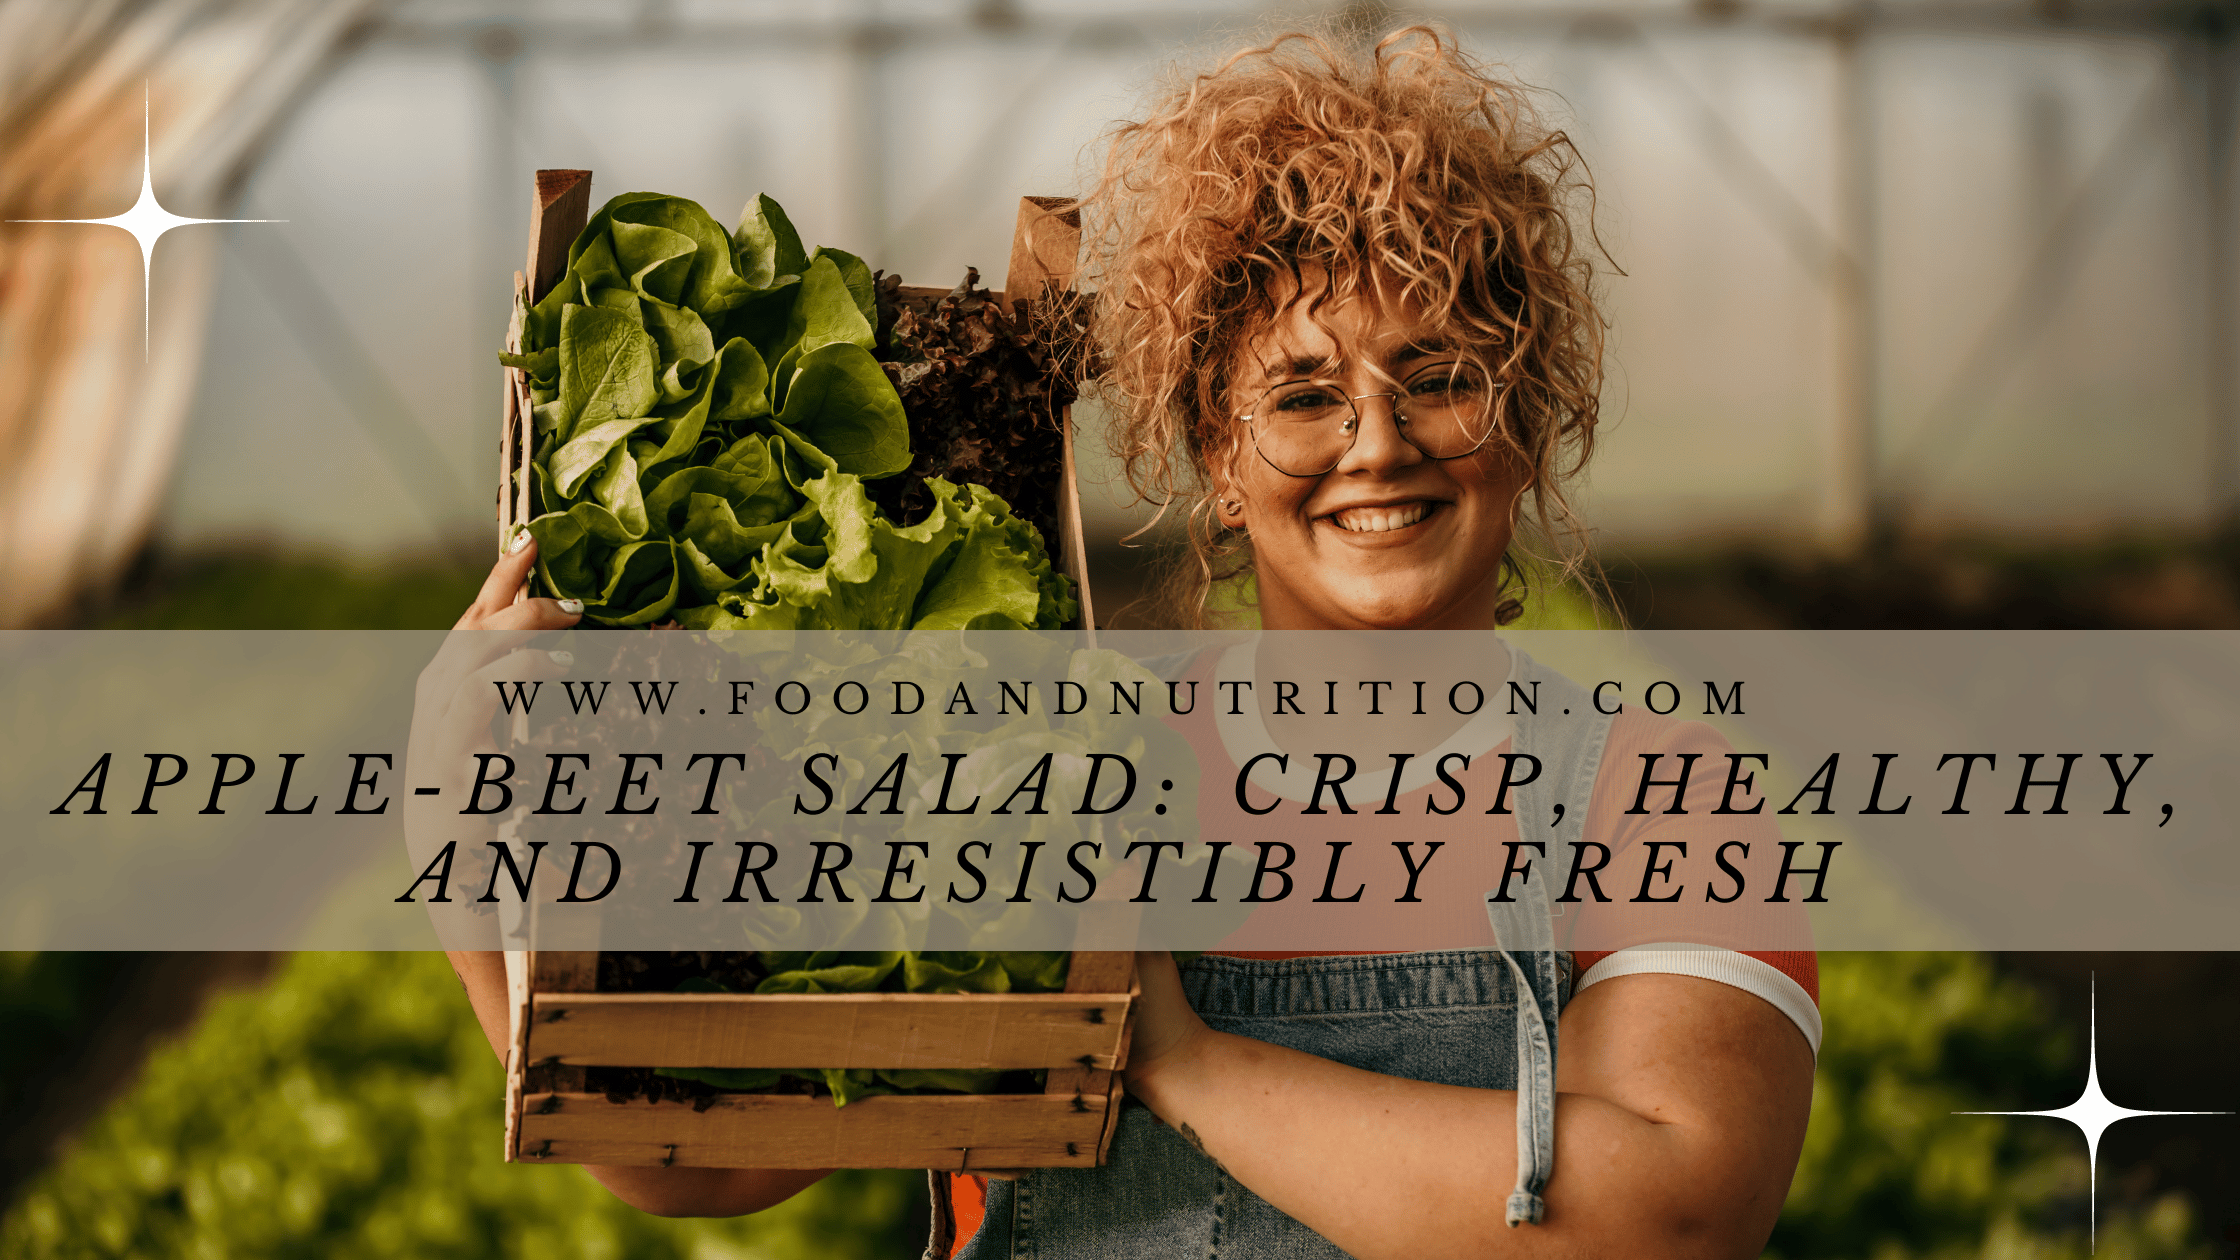 Apple-Beet Salad: Crisp, Healthy, and Irresistibly Fresh